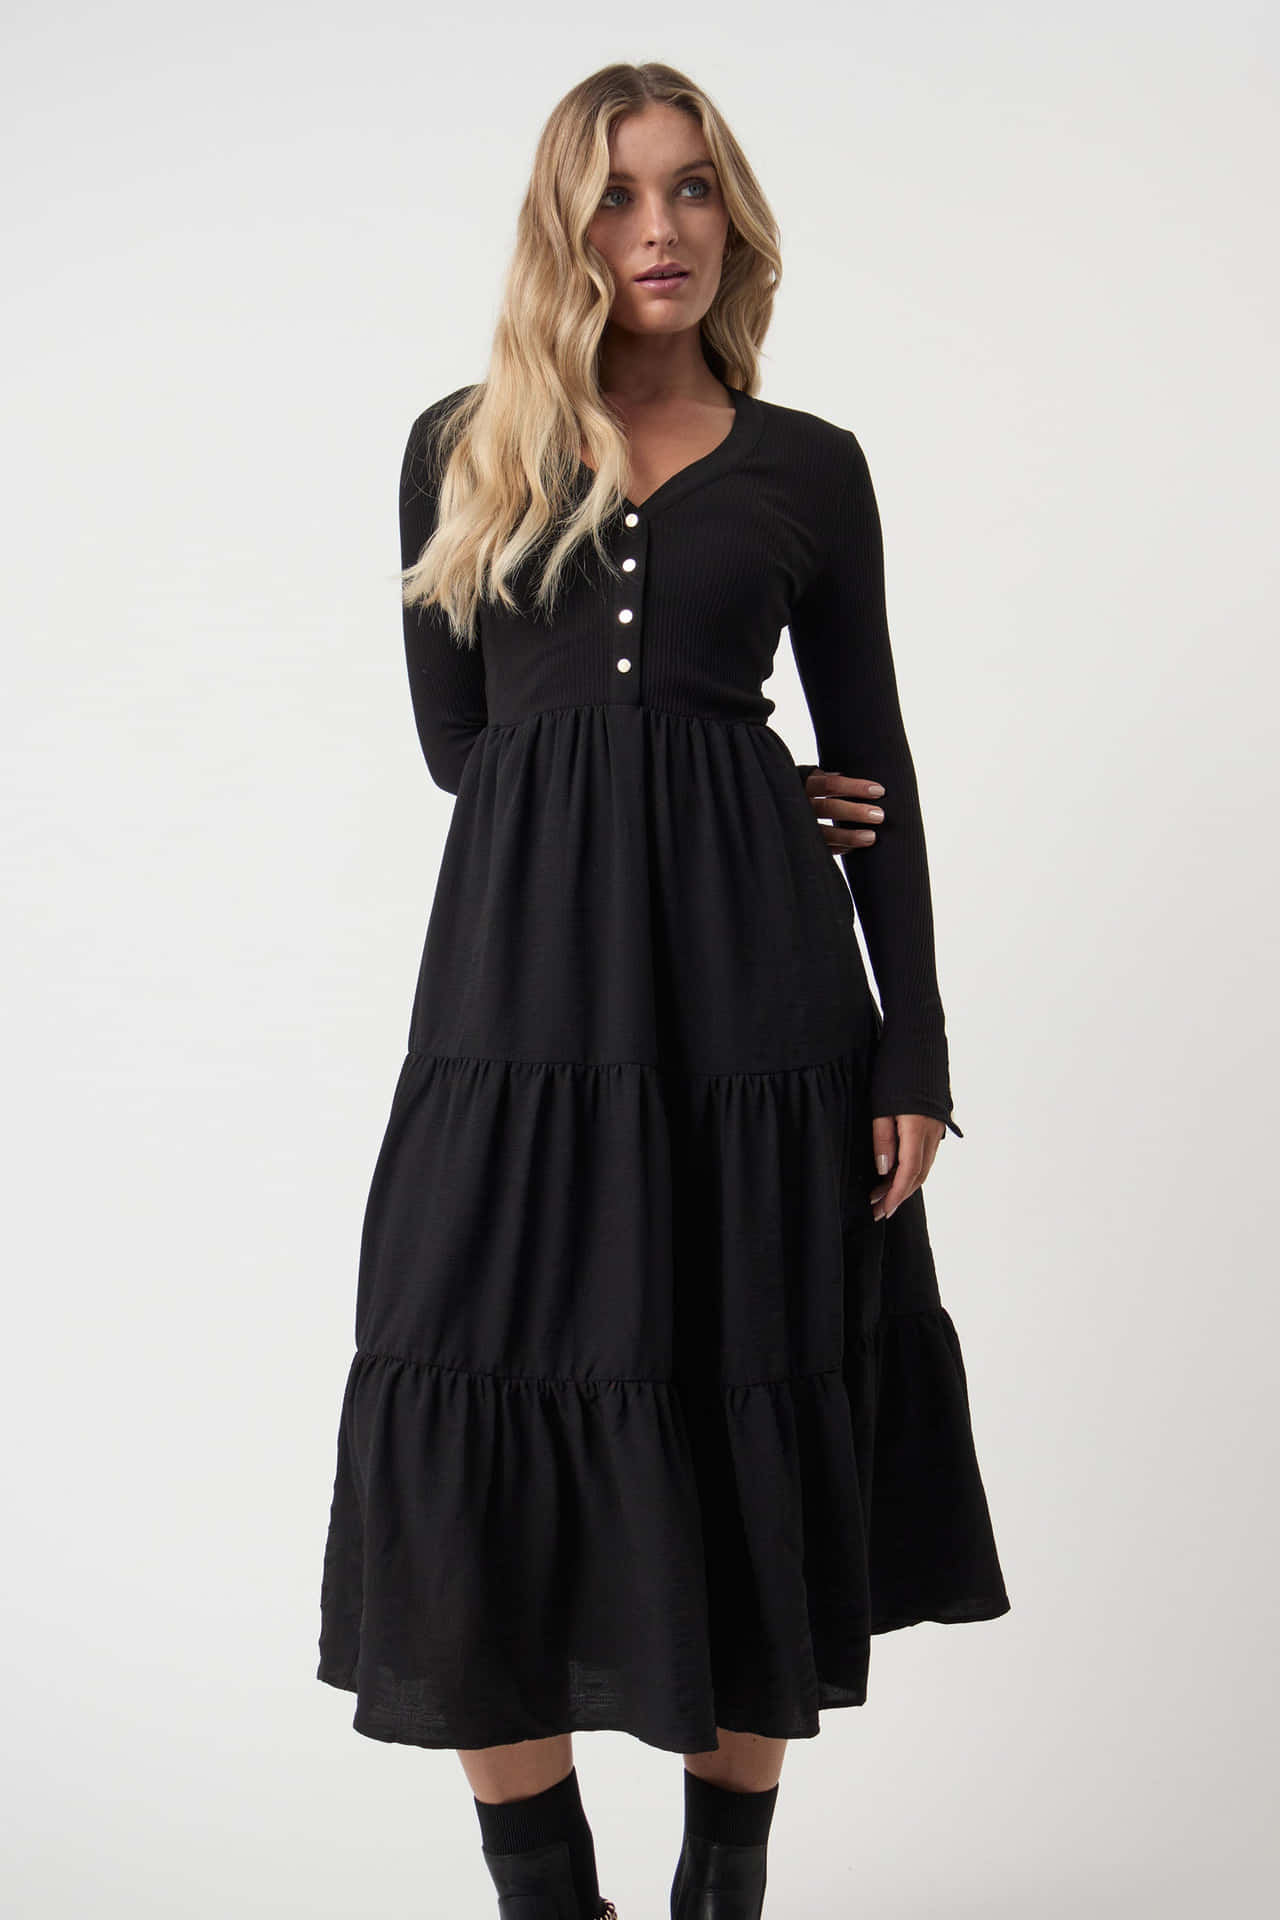 A Woman Wearing A Black Tiered Dress